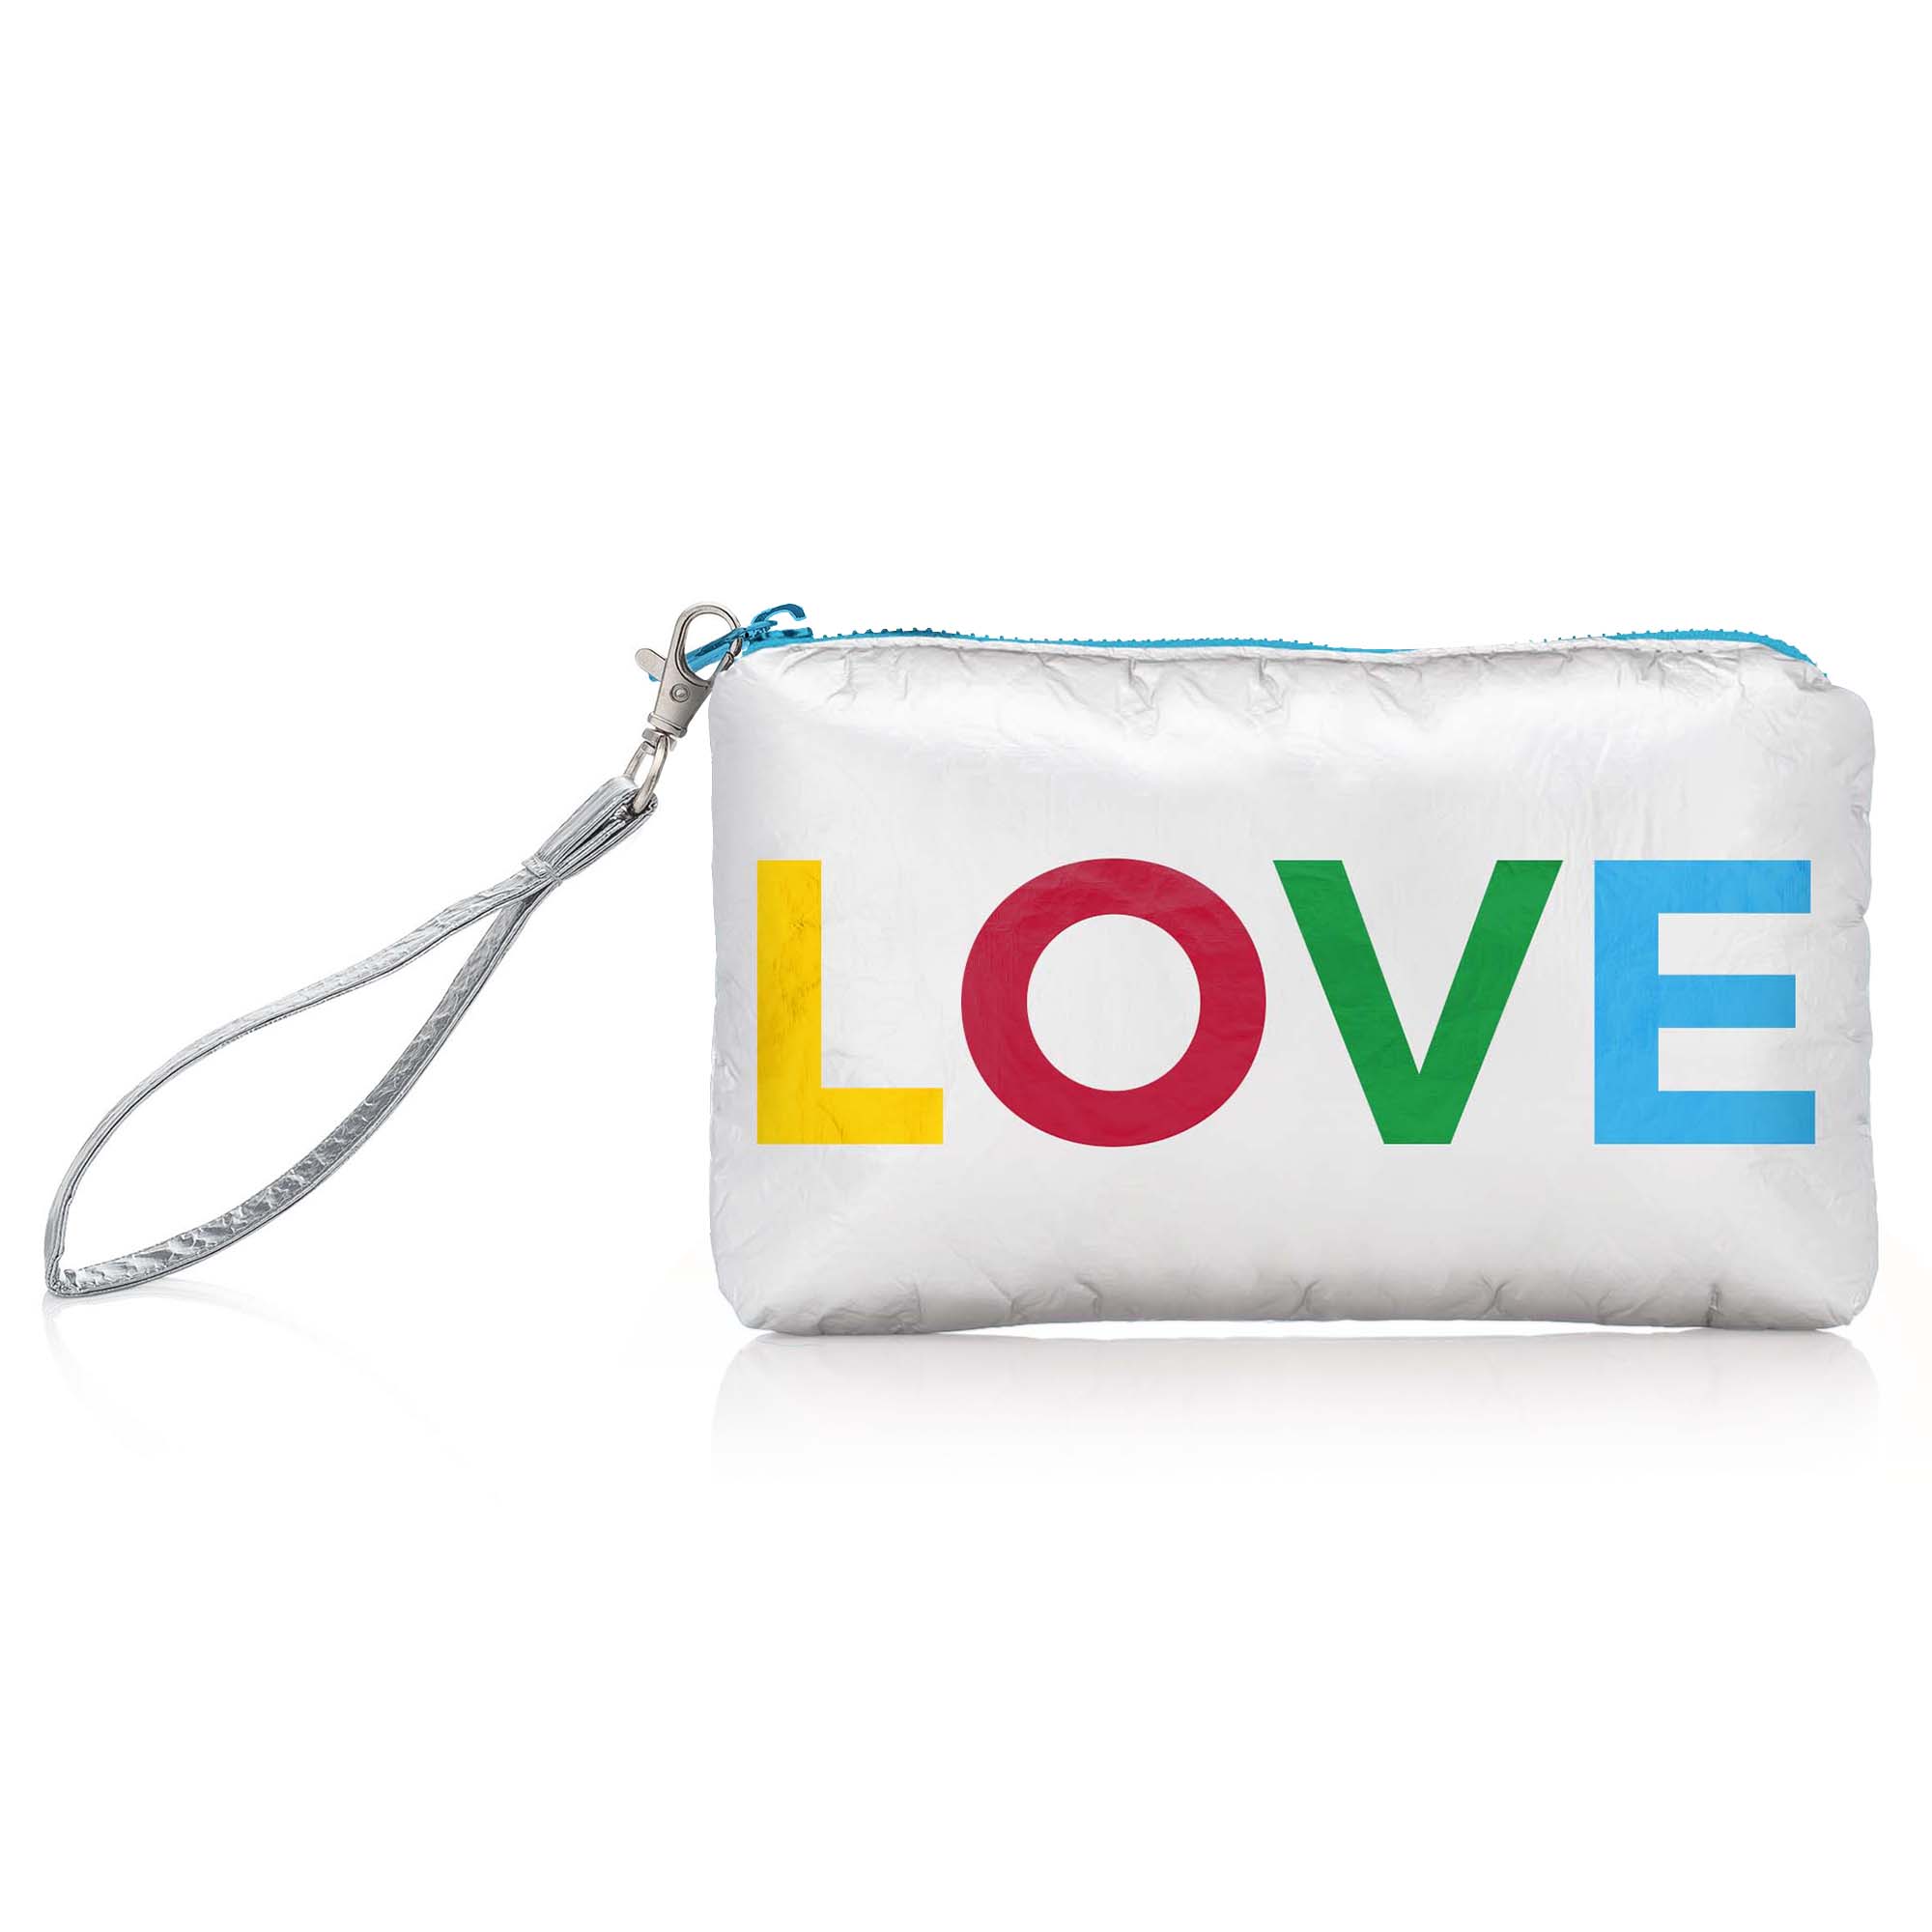 Zip Wristlet in White with Rainbow "LOVE"